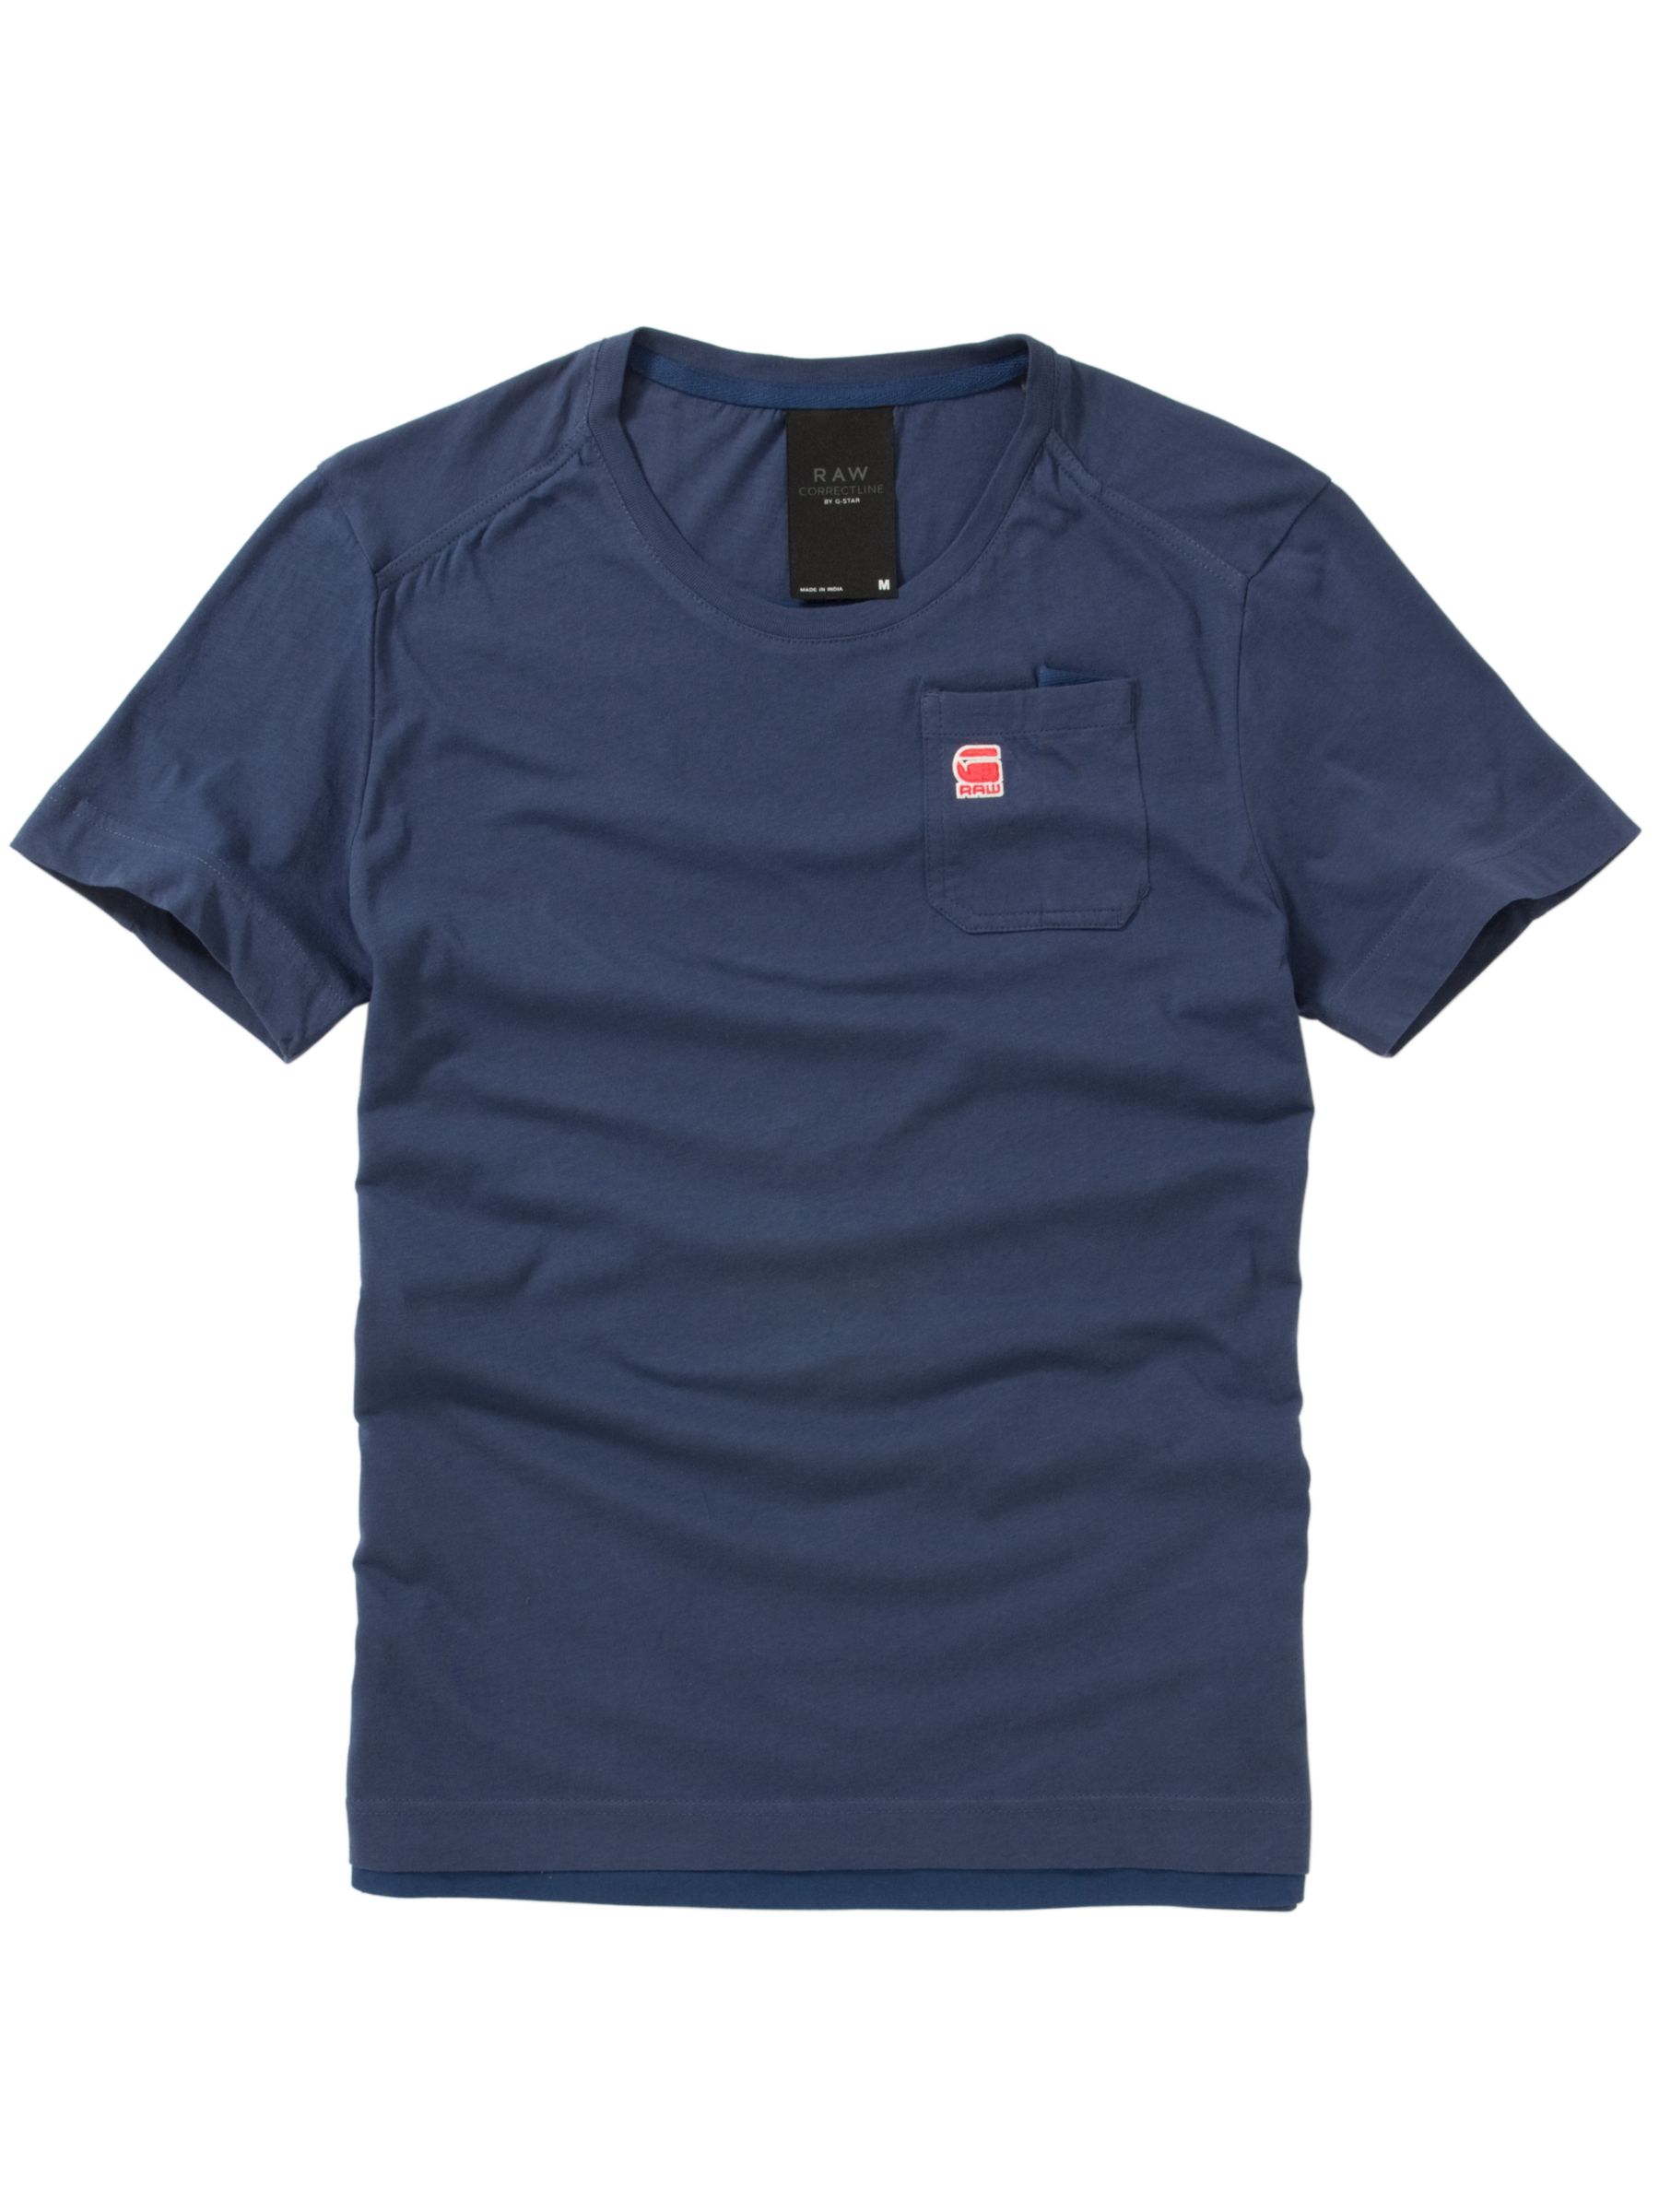 Harold Crew Neck T-Shirt, Riviera Blue